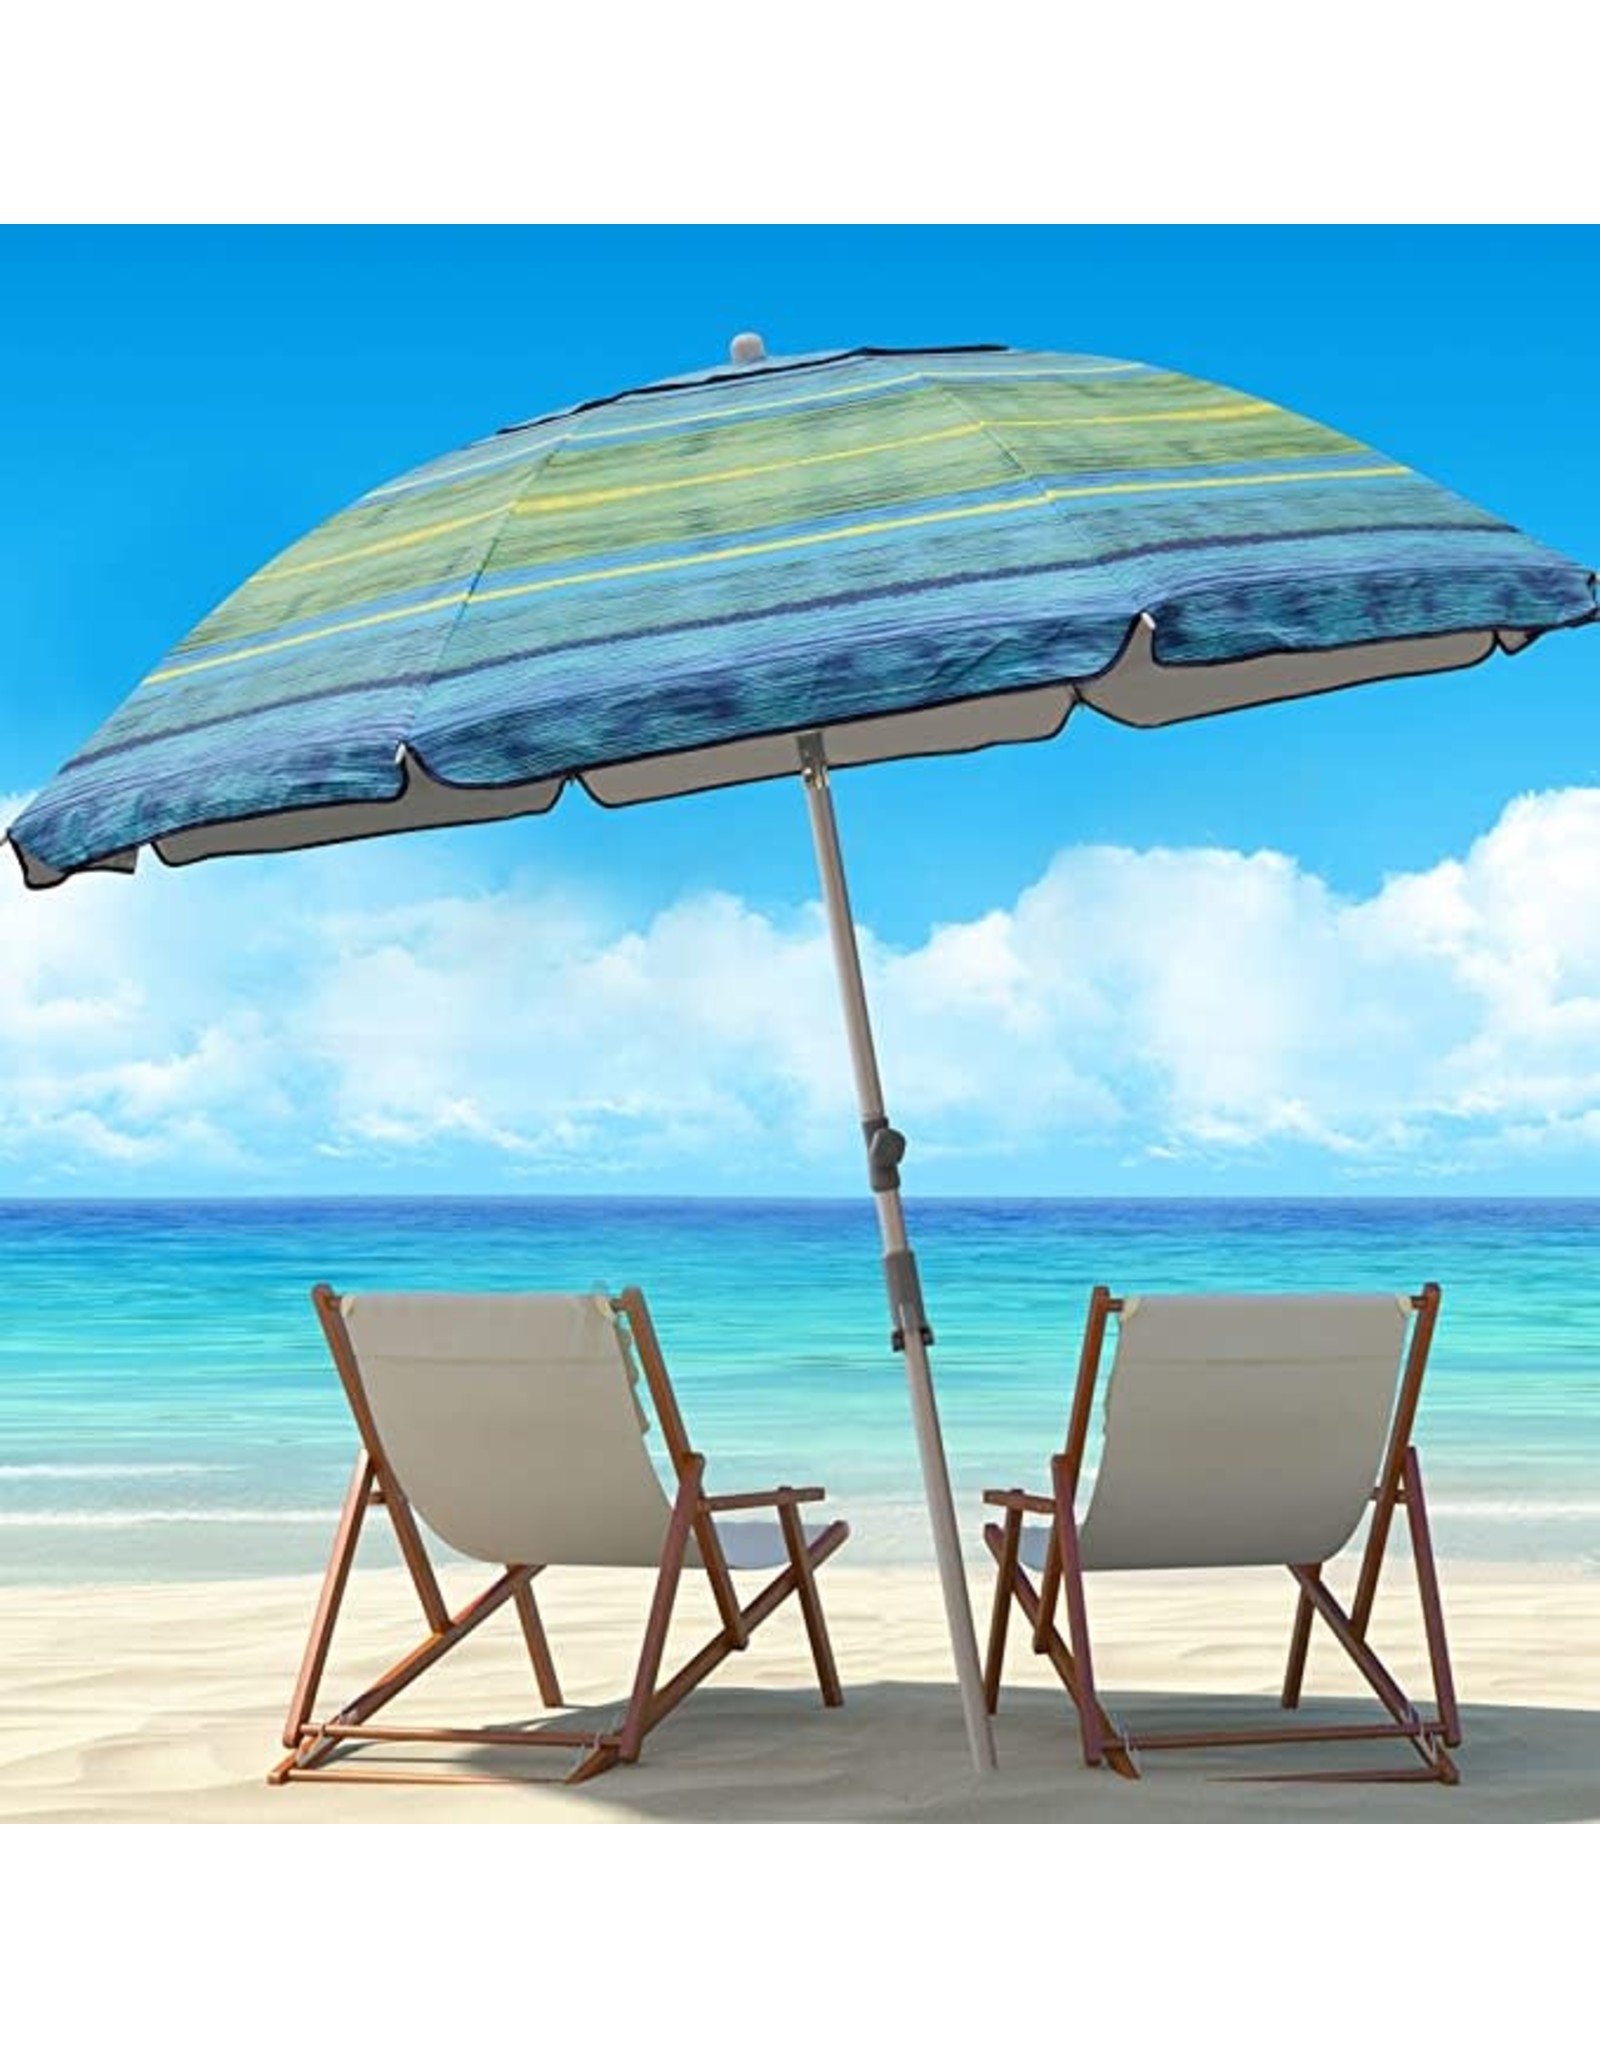 Portable beach umbrella with sand anchor Push Button Tilt Air vent Color Blue 